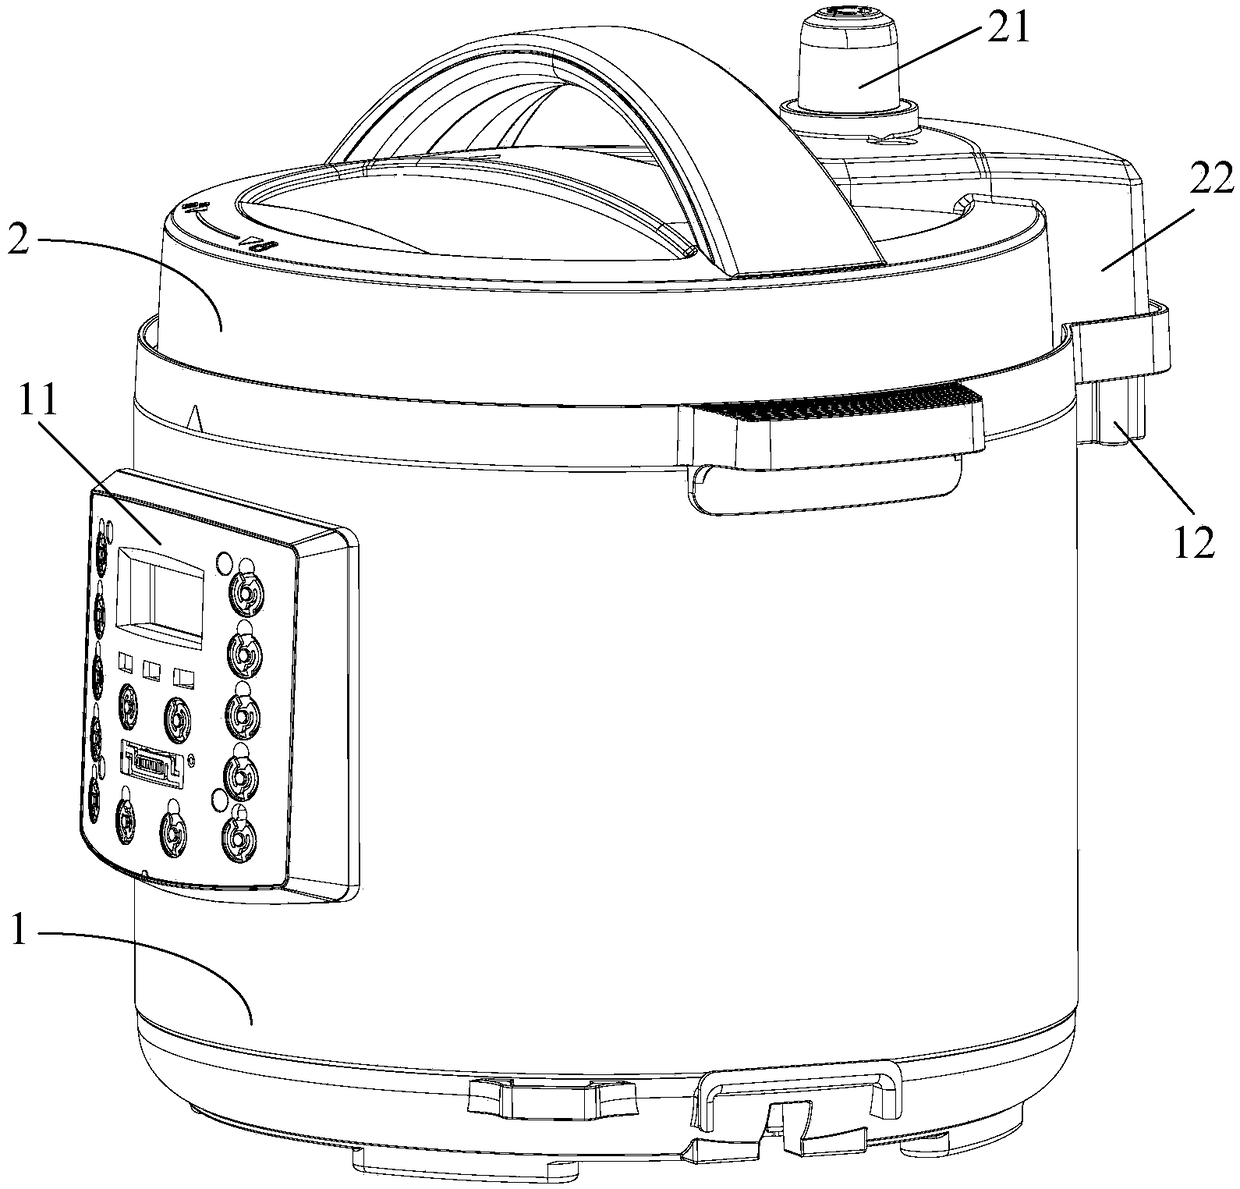 Split type electric pressure cooker